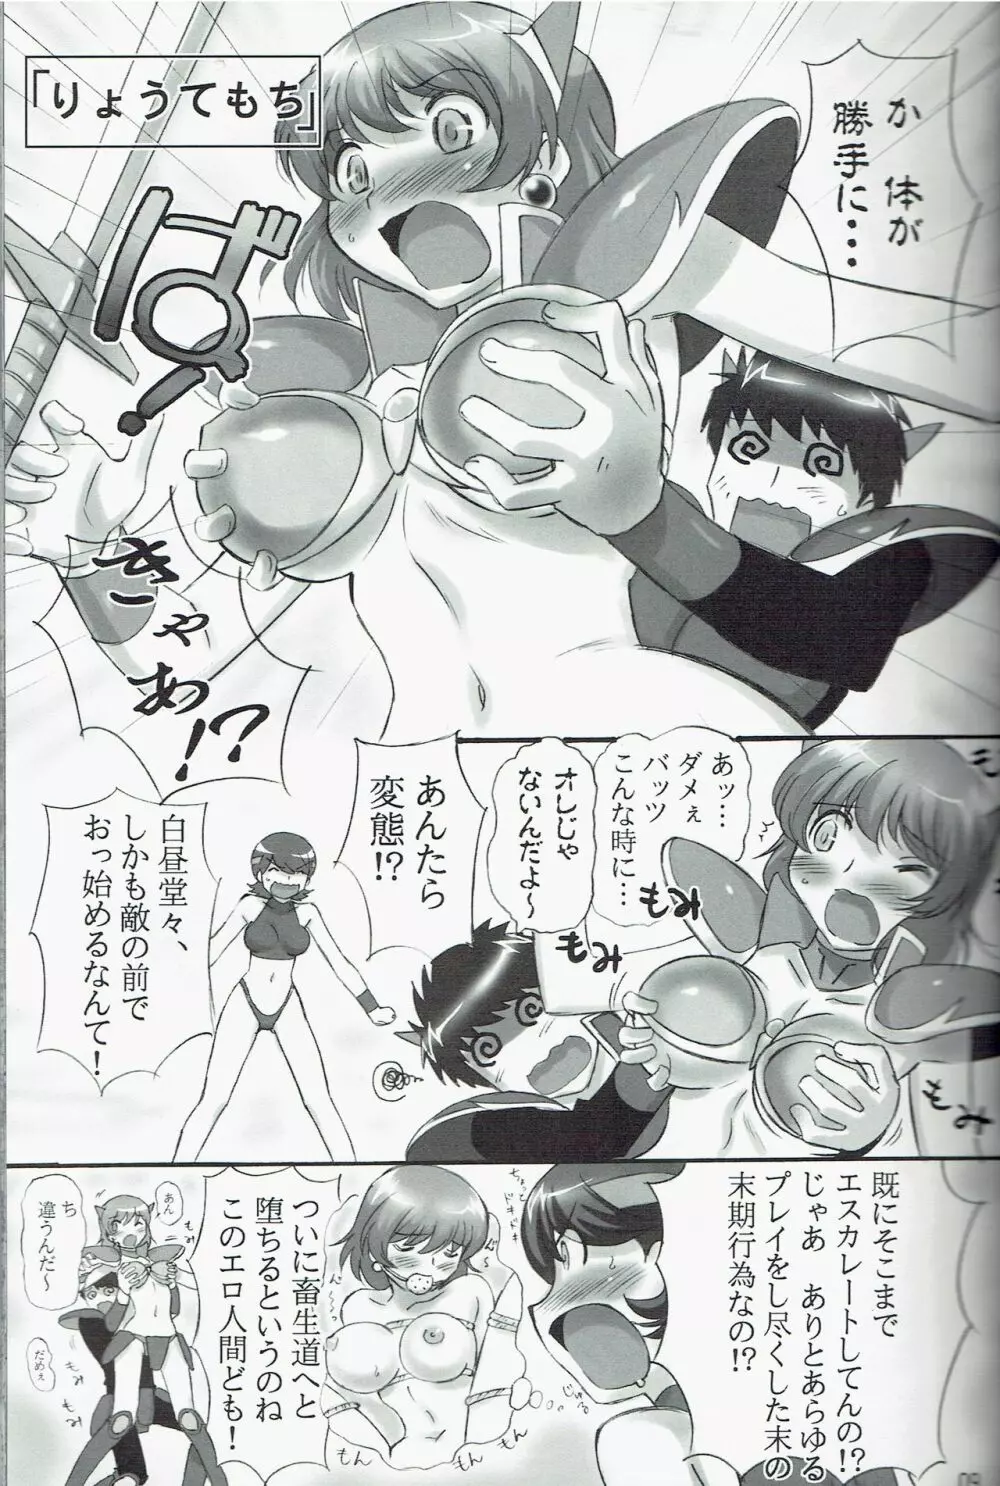 JOB☆STAR 13 - page9